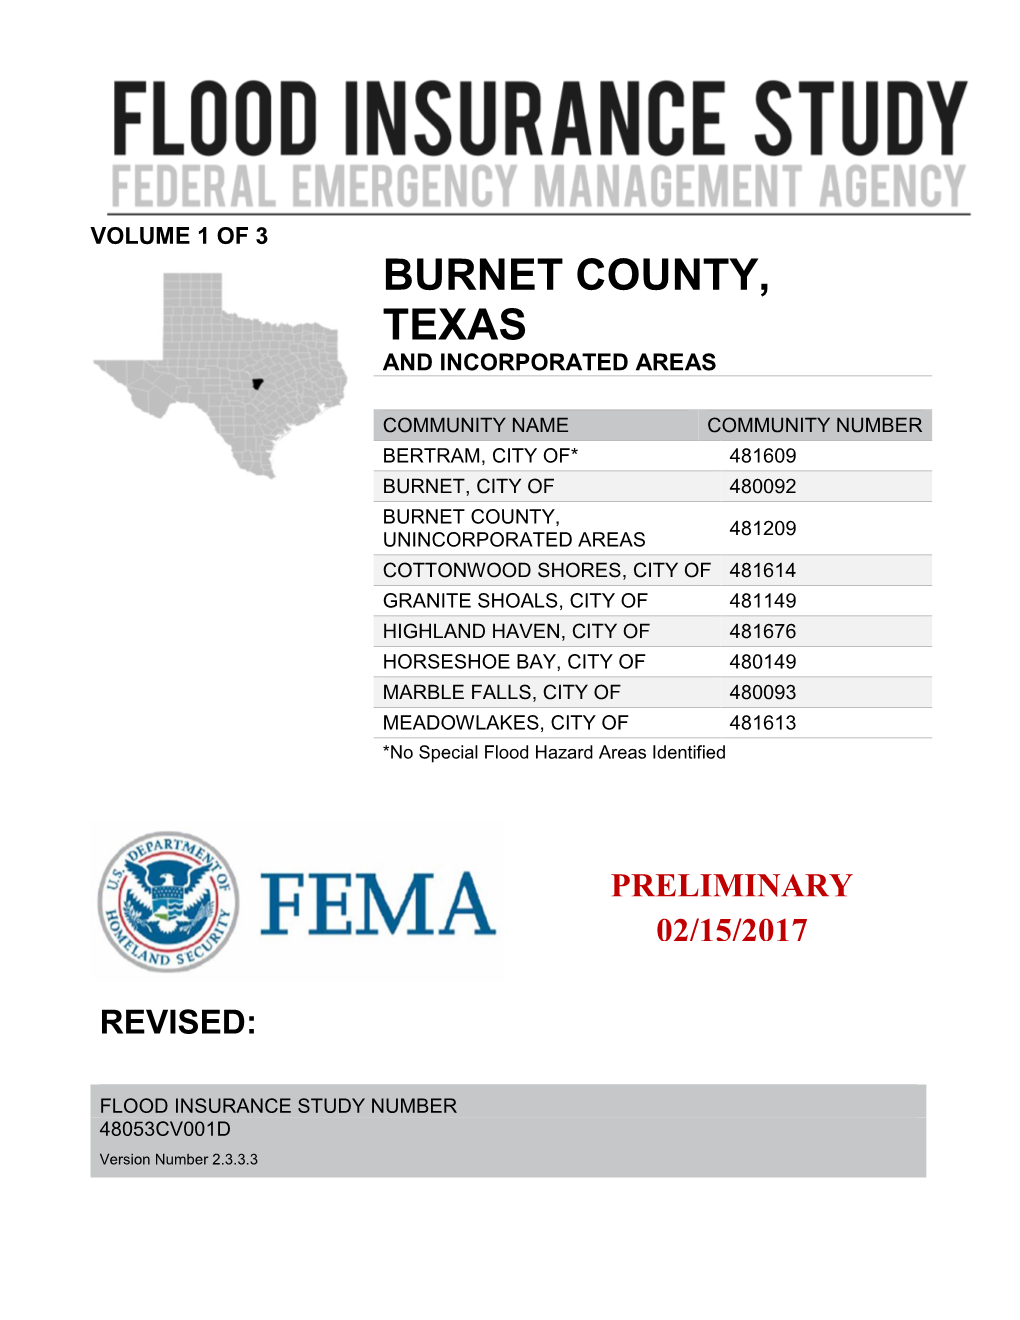 FEMA Flood Insurance Study Volume 1 of 3